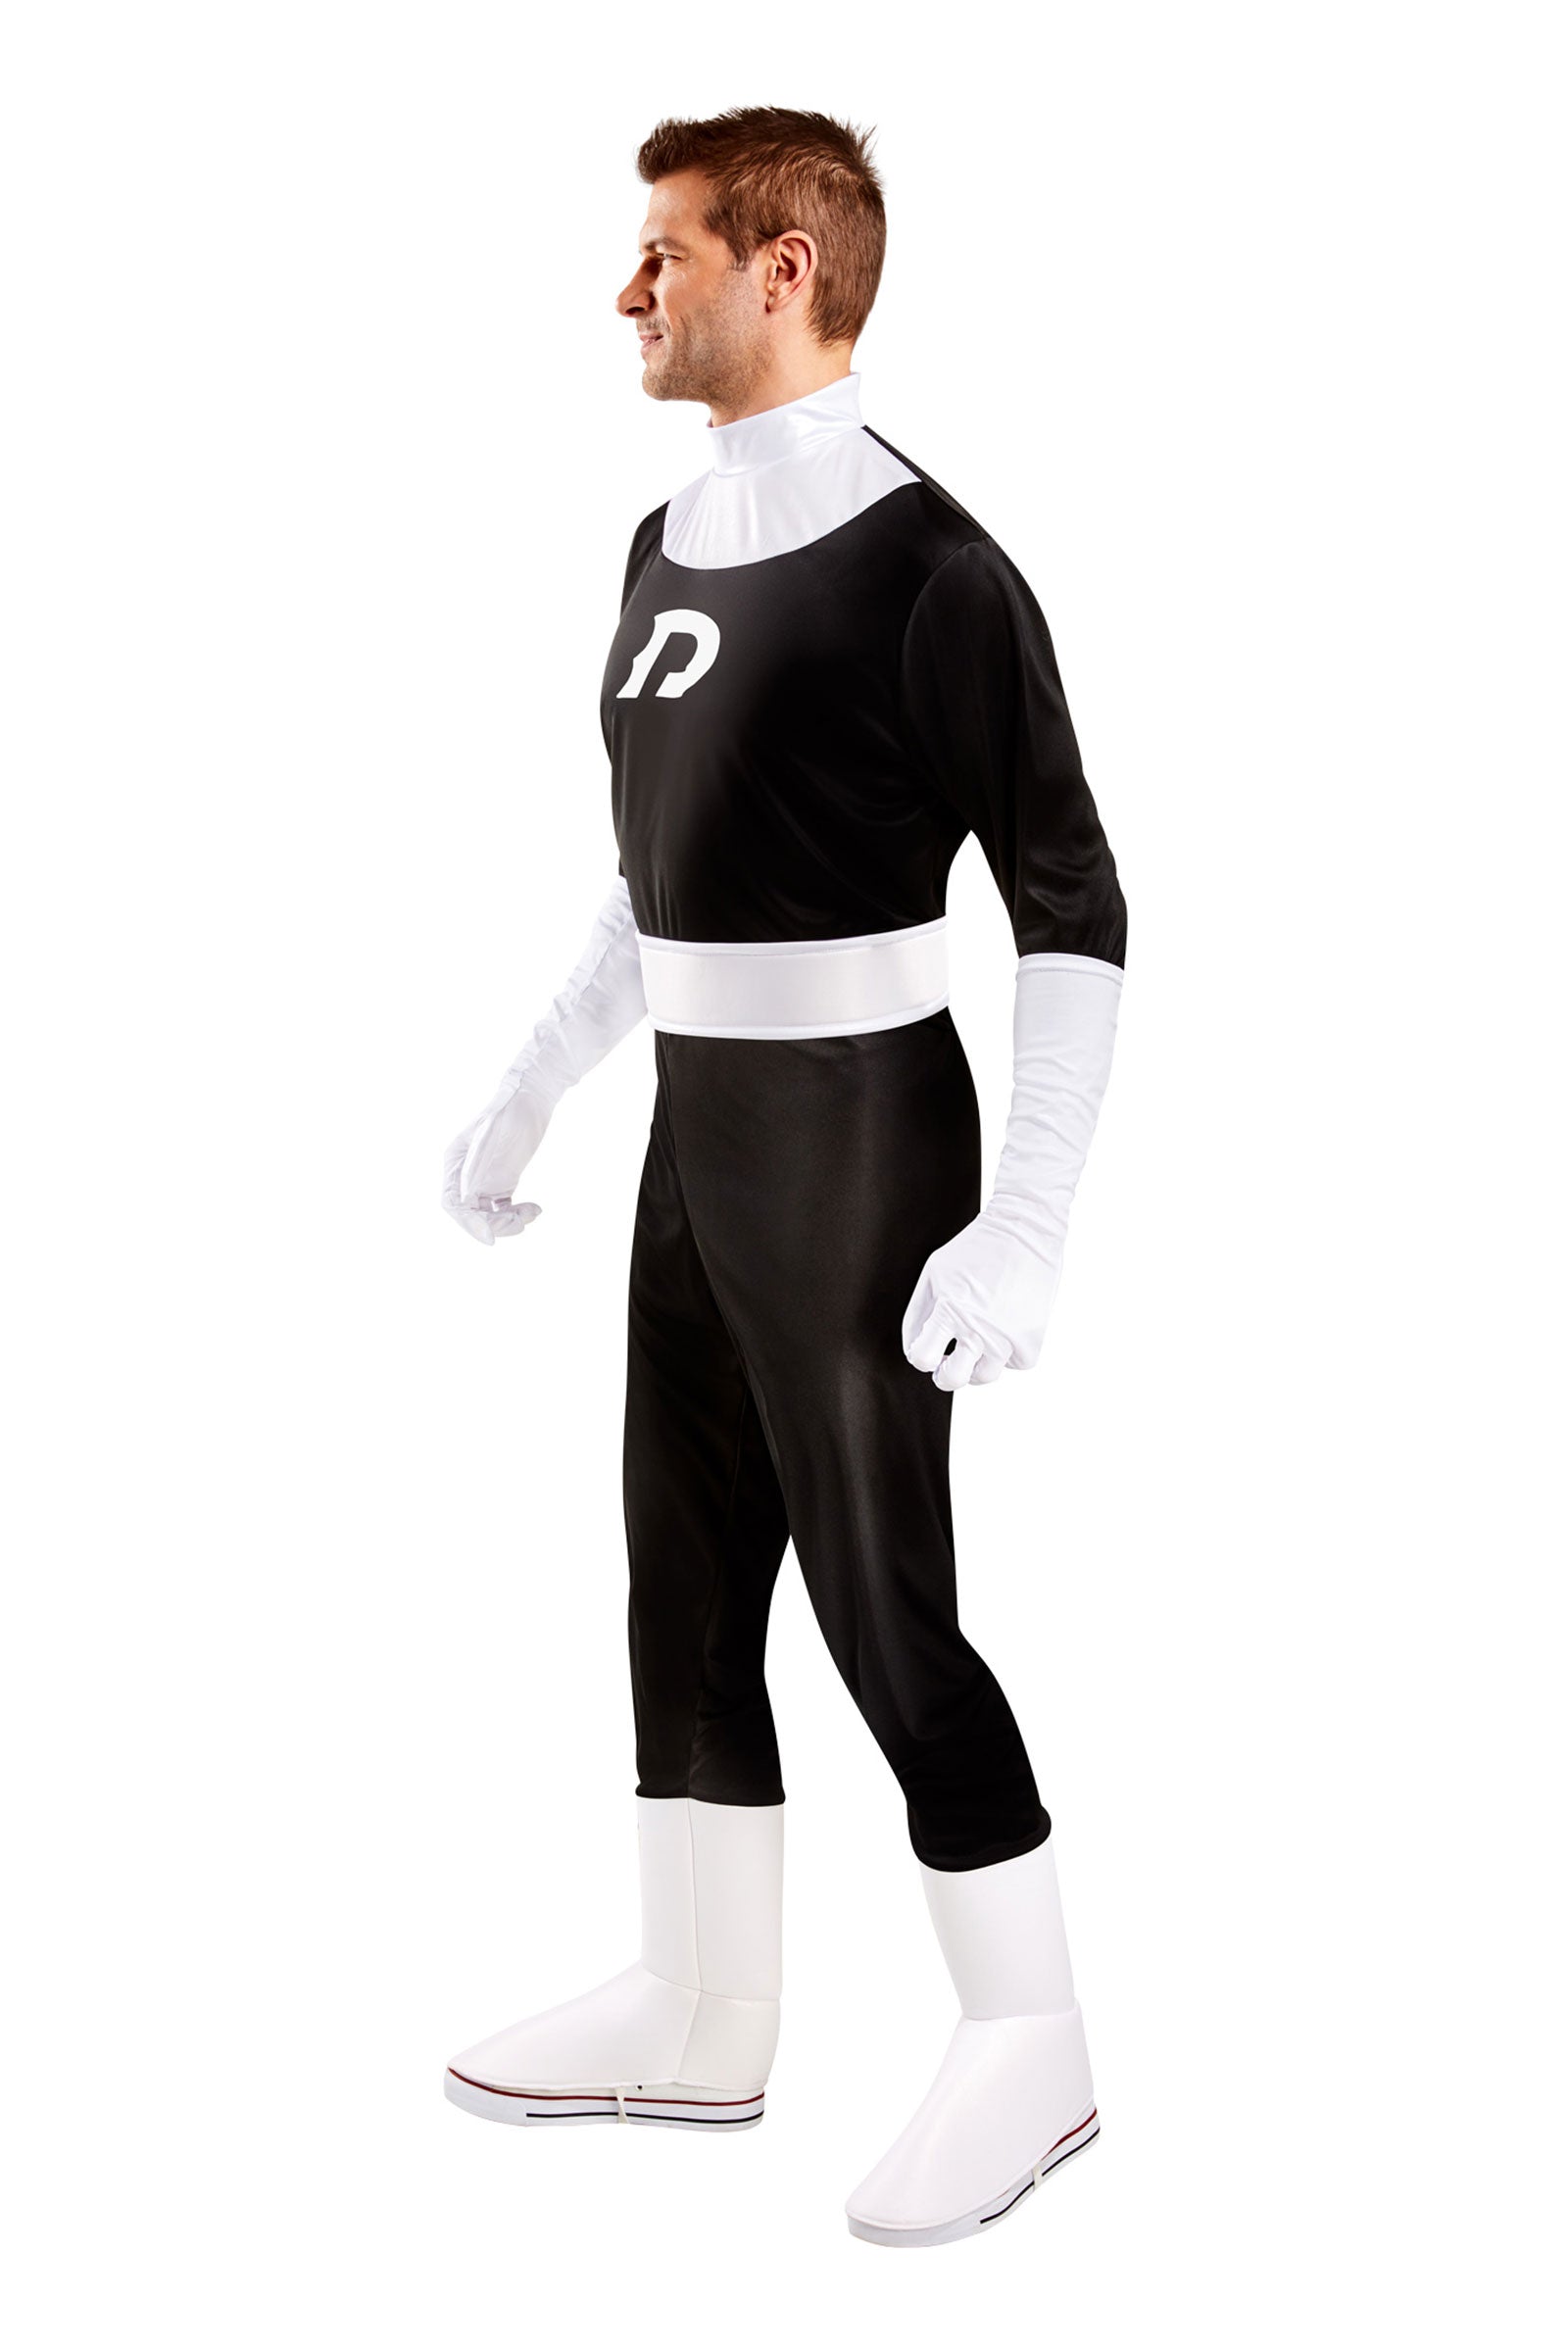 Danny Phantom Adult Costume